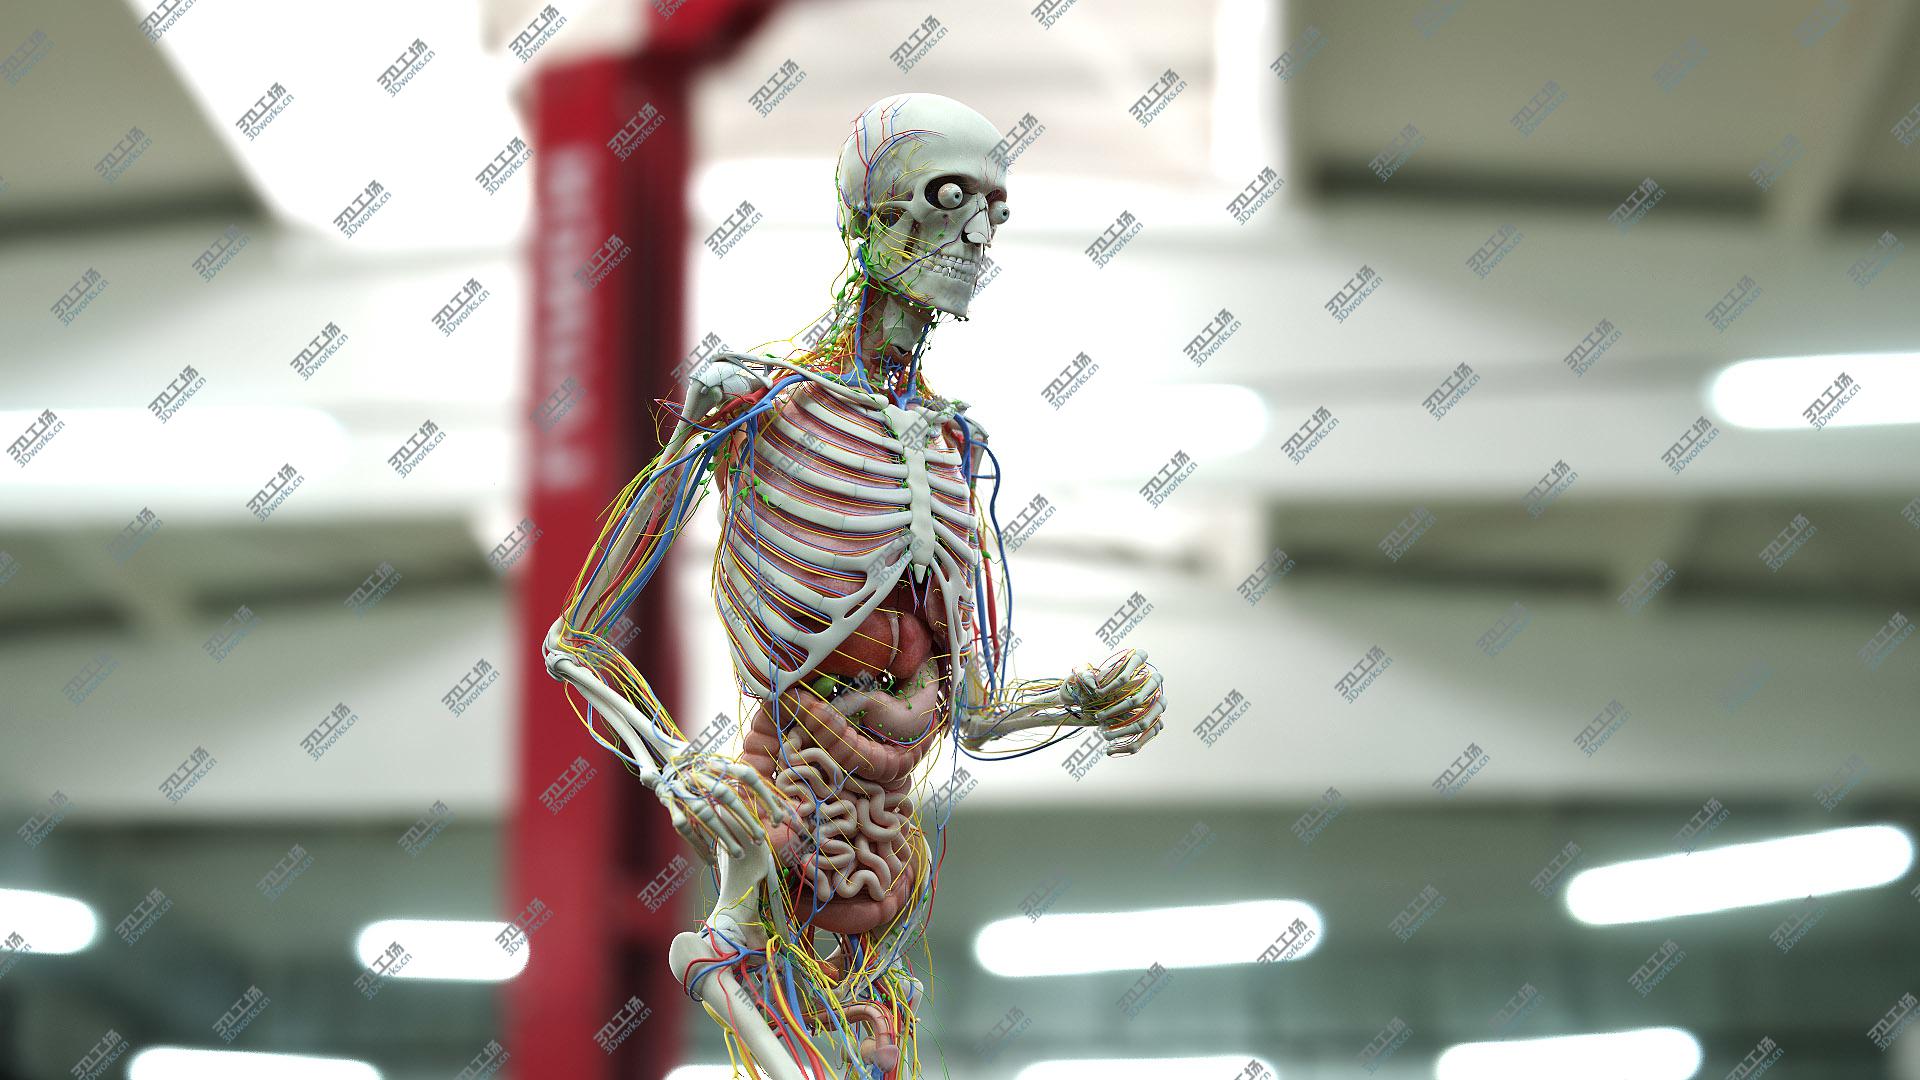 images/goods_img/20210113/3D Full Male And Female Anatomy Set (Cinema Rigged) model/5.jpg